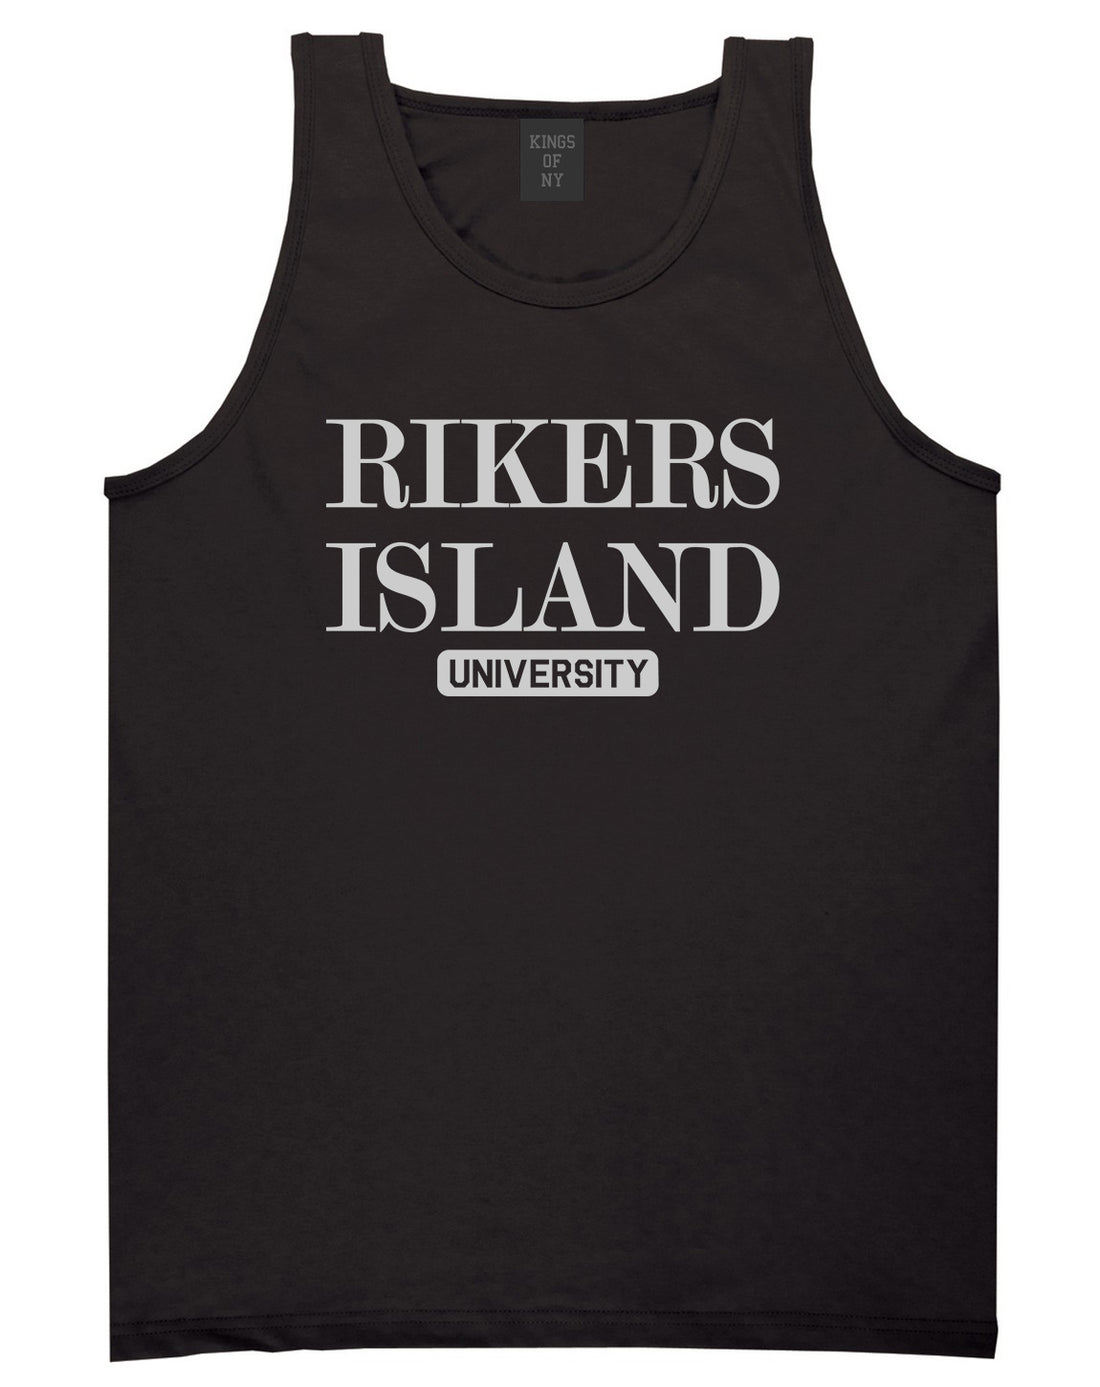 Rikers Island University Mens Tank Top T-Shirt Black